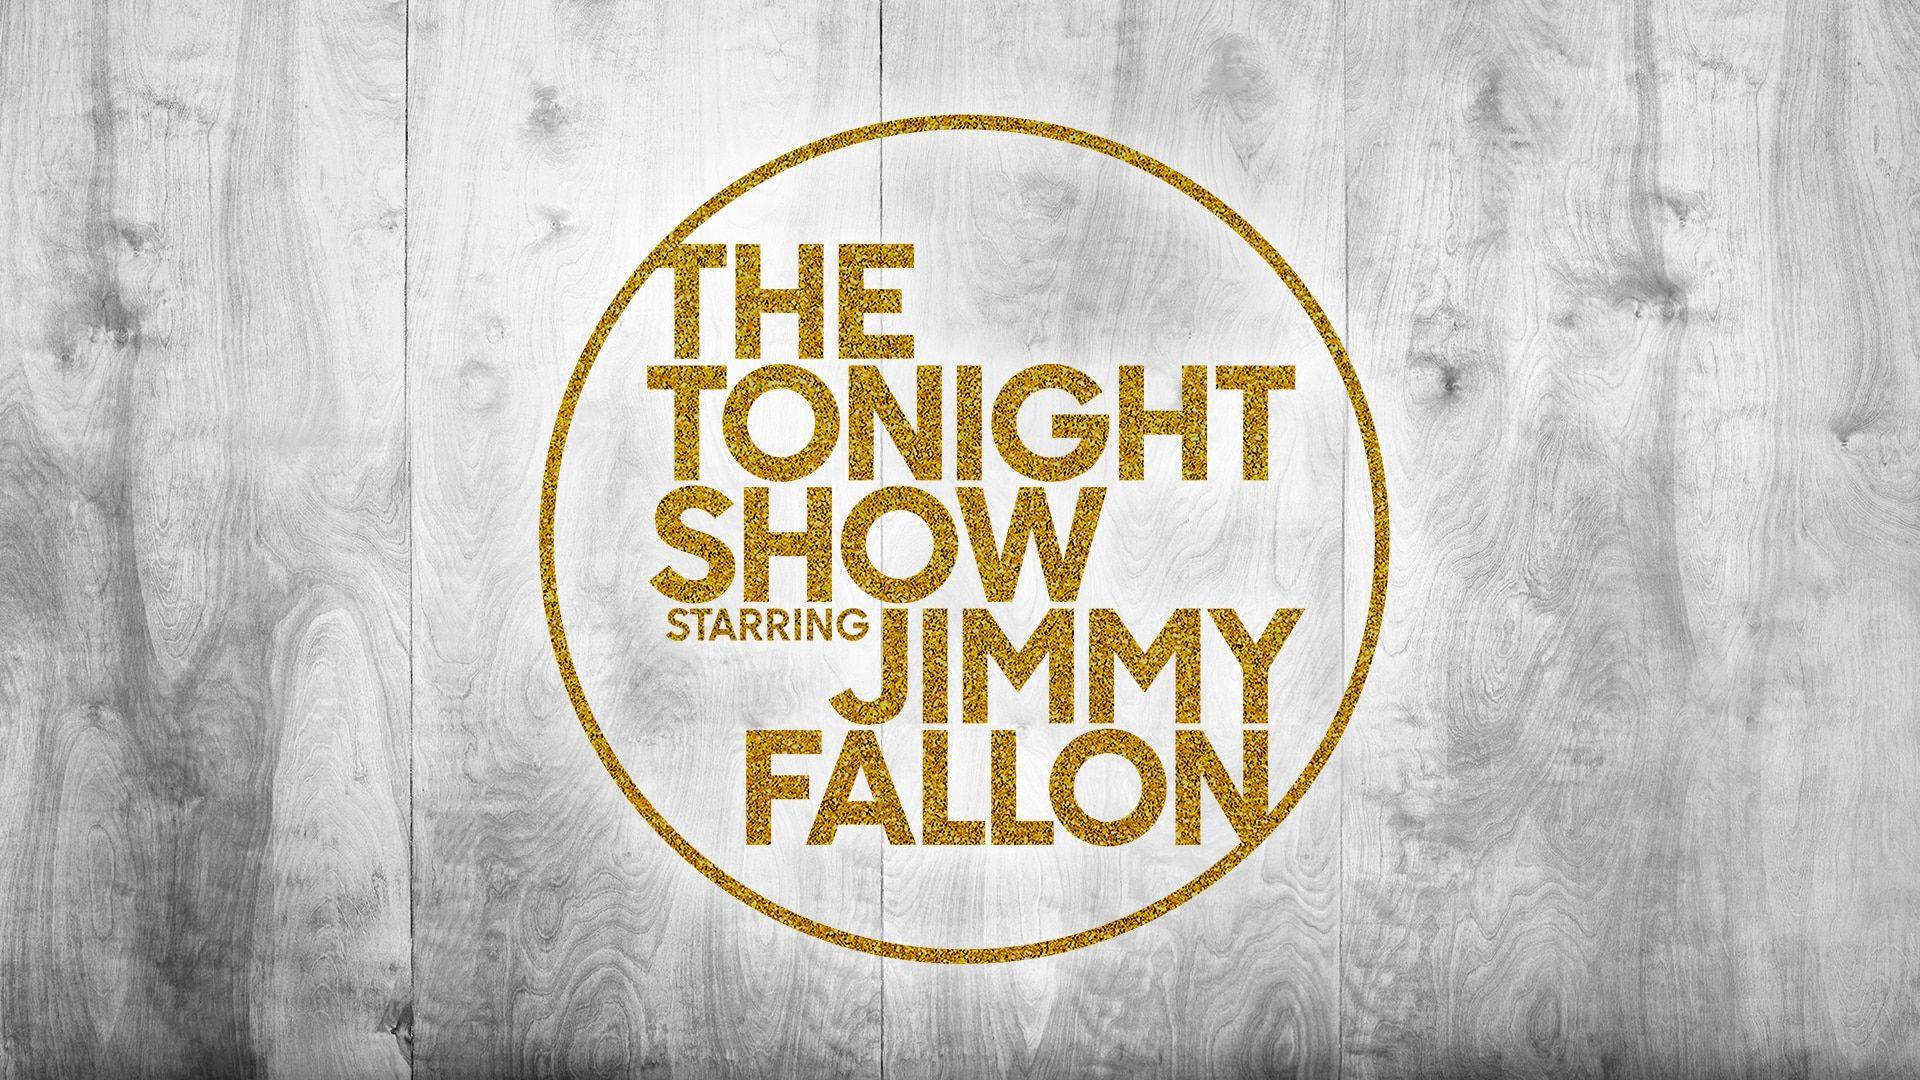 NBC Today Show Logo - The Tonight Show Starring Jimmy Fallon - NBC.com